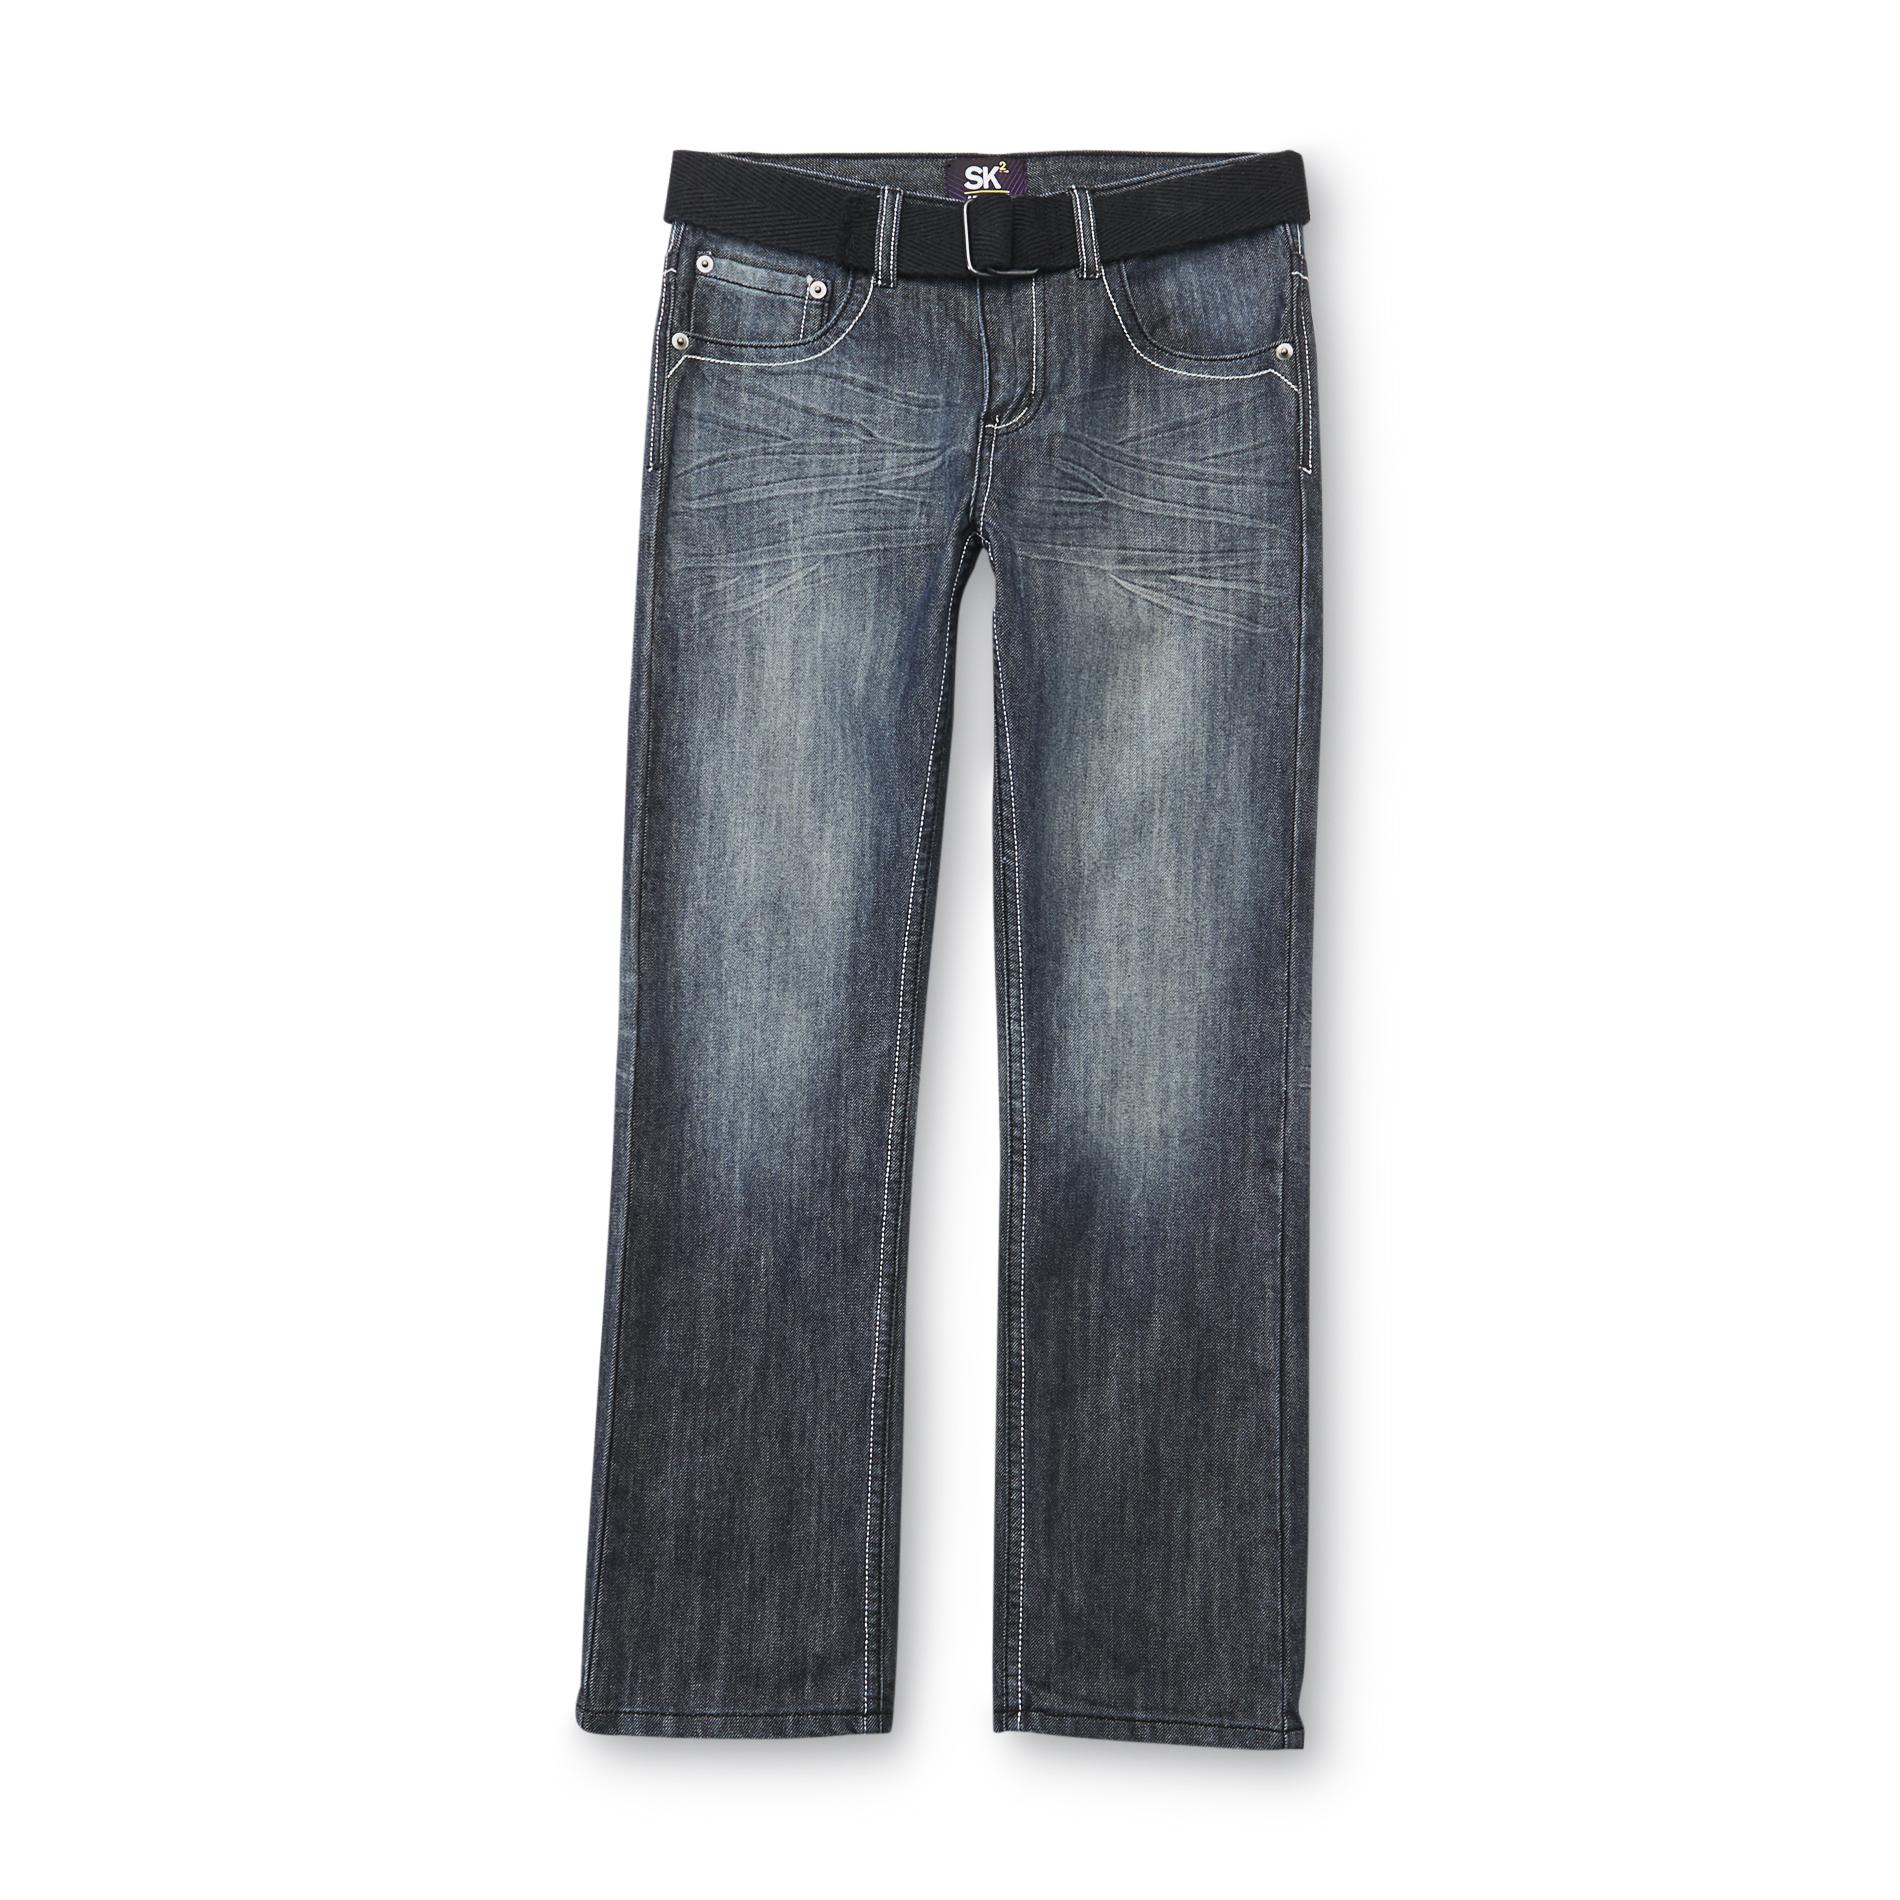 SK2 Boy's Slim Fit Skinny Jeans & Belt - Faded